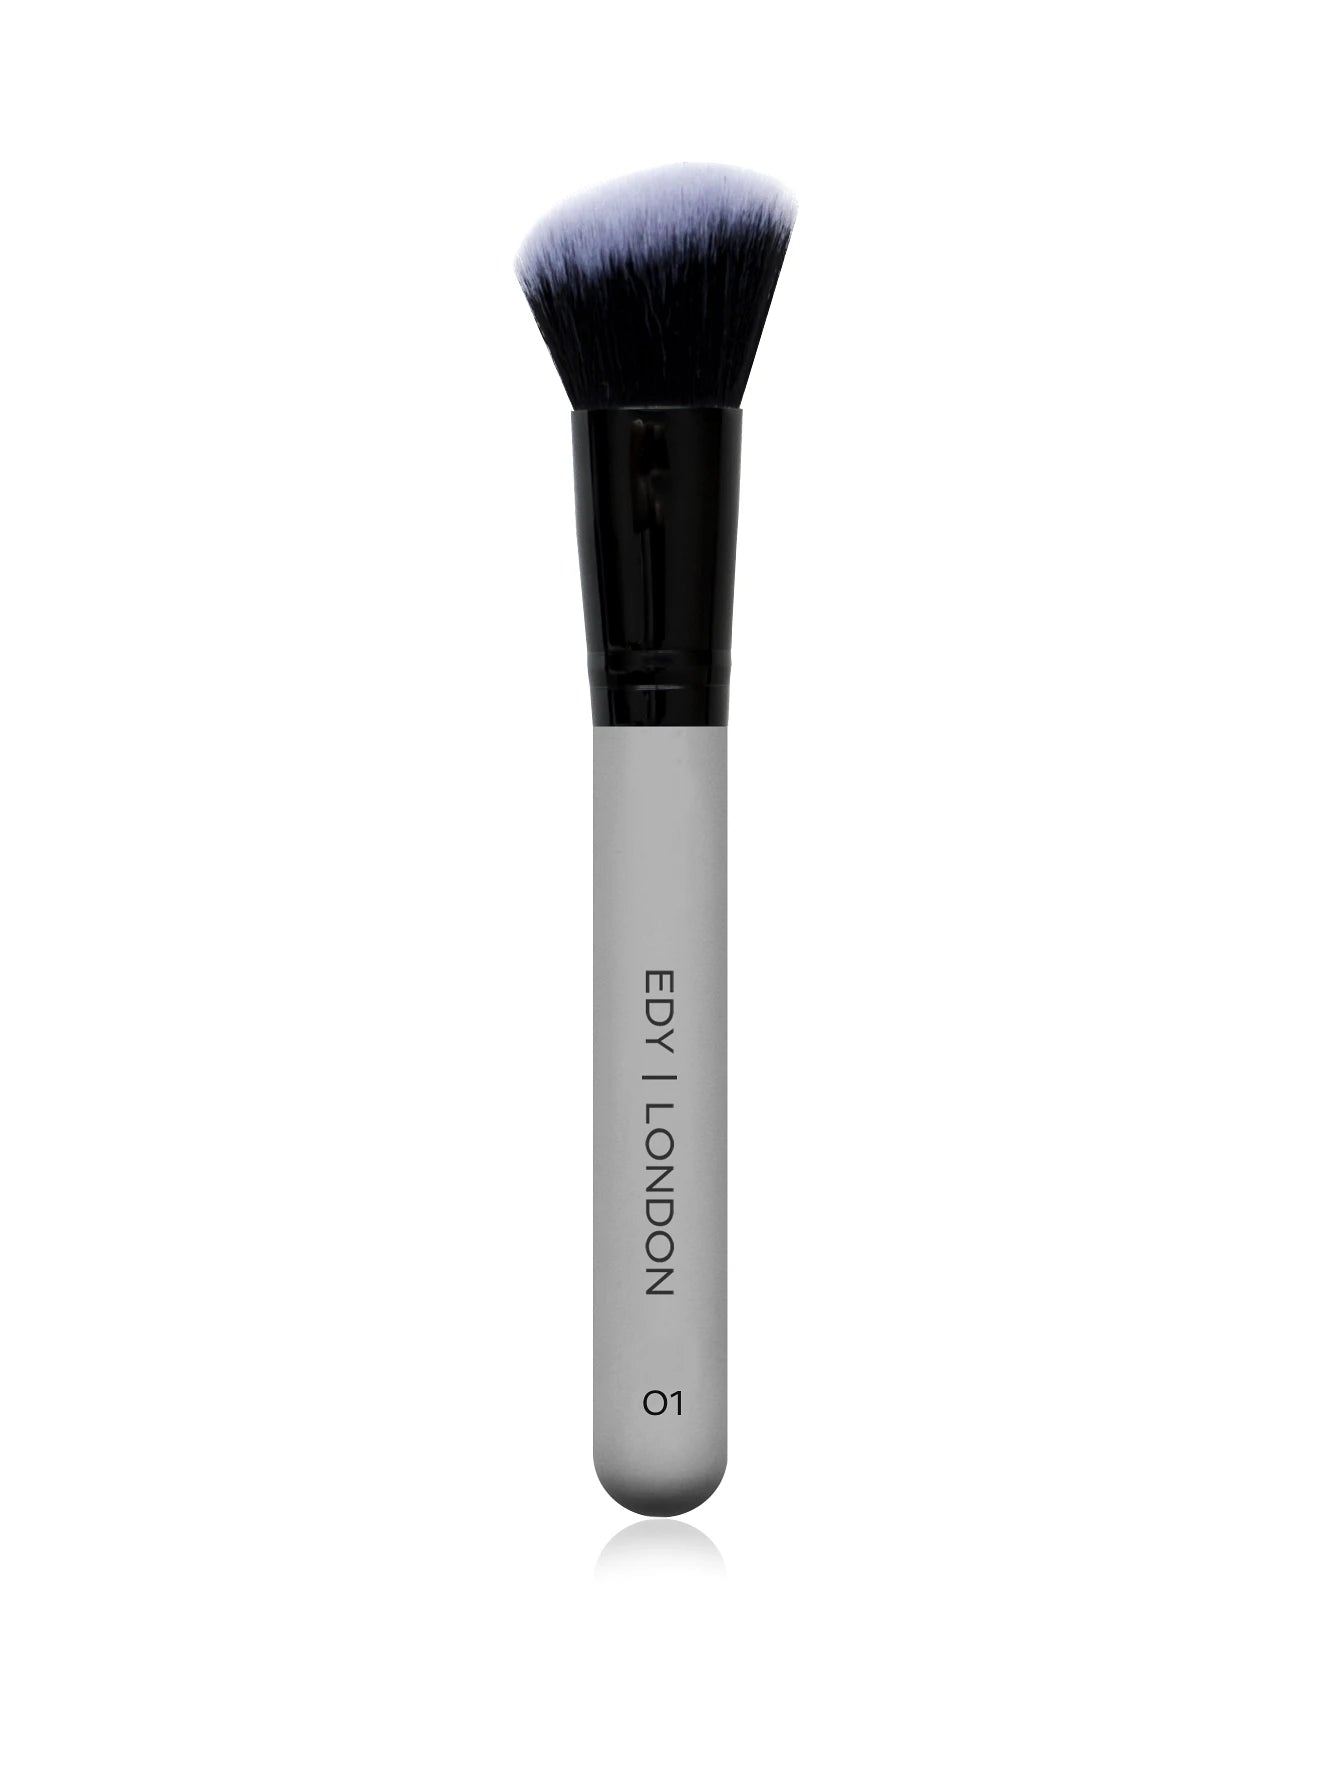 Angled Contour Face Brush 01 Make-up Brush EDY LONDON Cool Grey   - EDY LONDON PRODUCTS UK - The Best Makeup Brushes - shop.edy.london